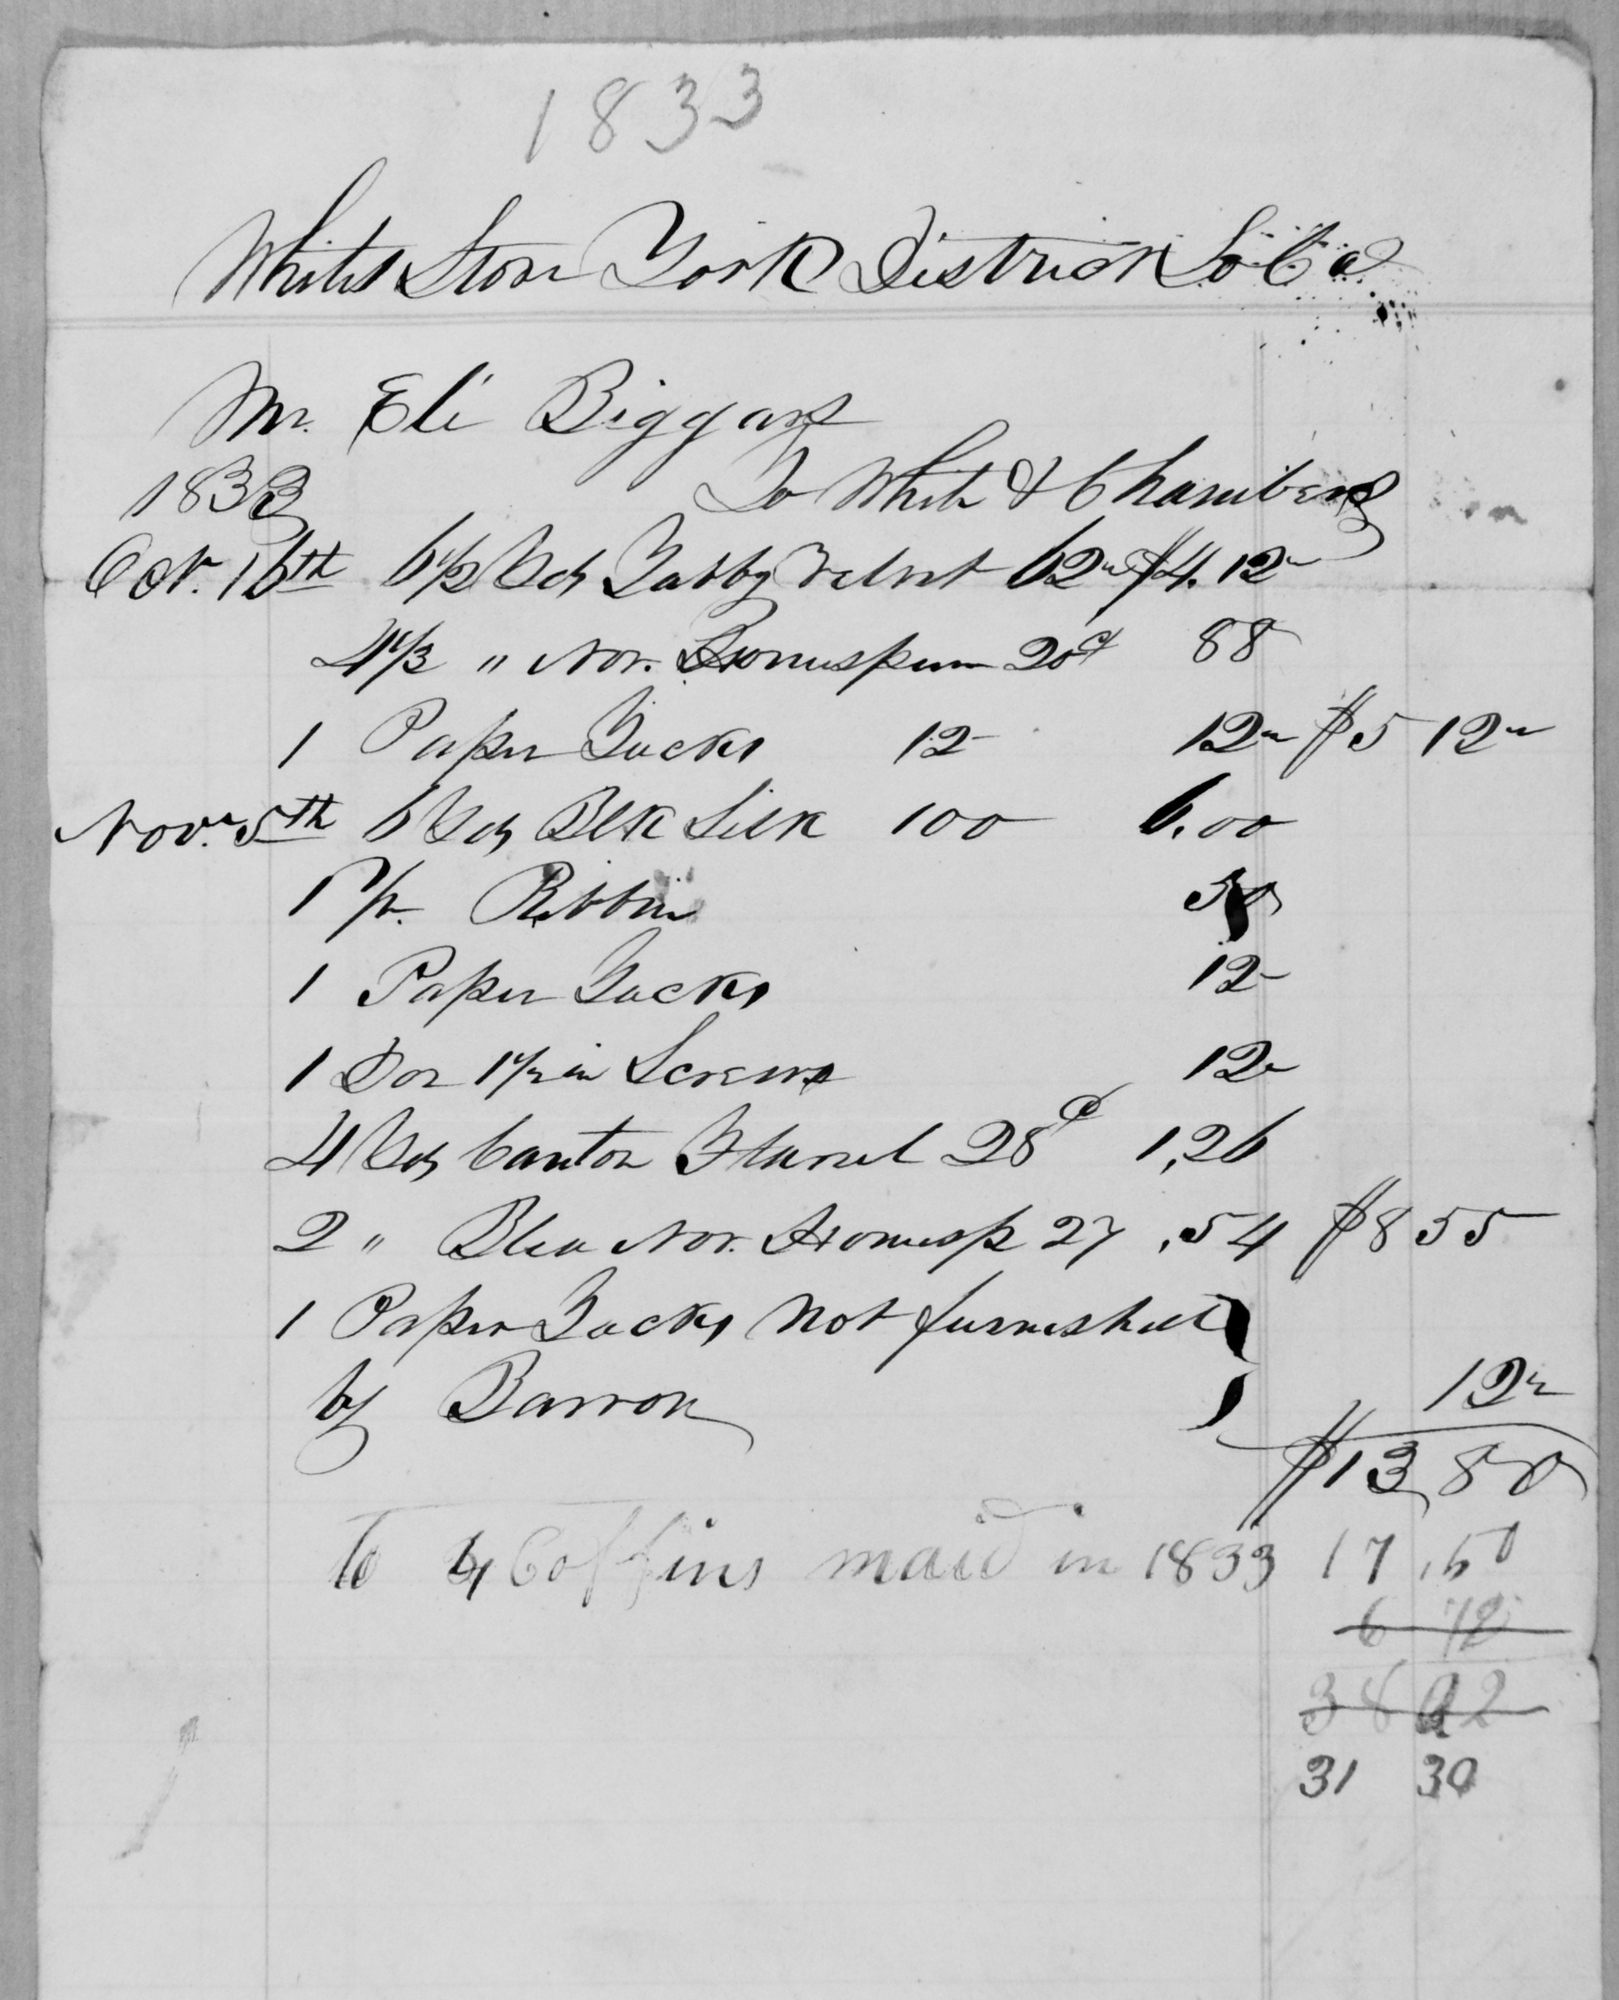 White's Store Account for Eli Biggars - 1833